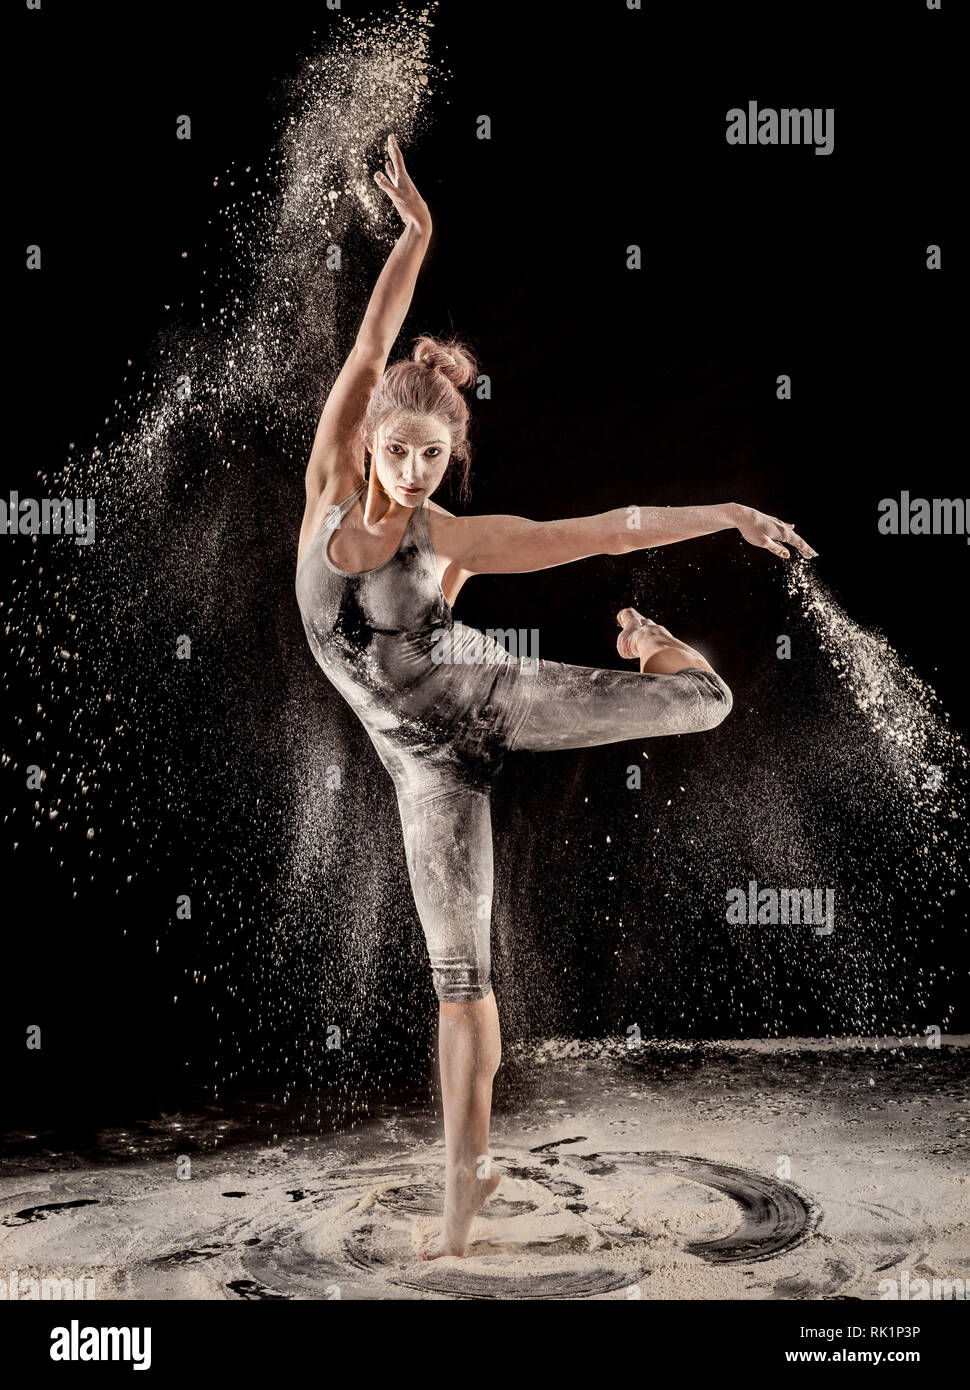 For det andet Alligevel i aften Flour dance with a ballerina Stock Photo - Alamy